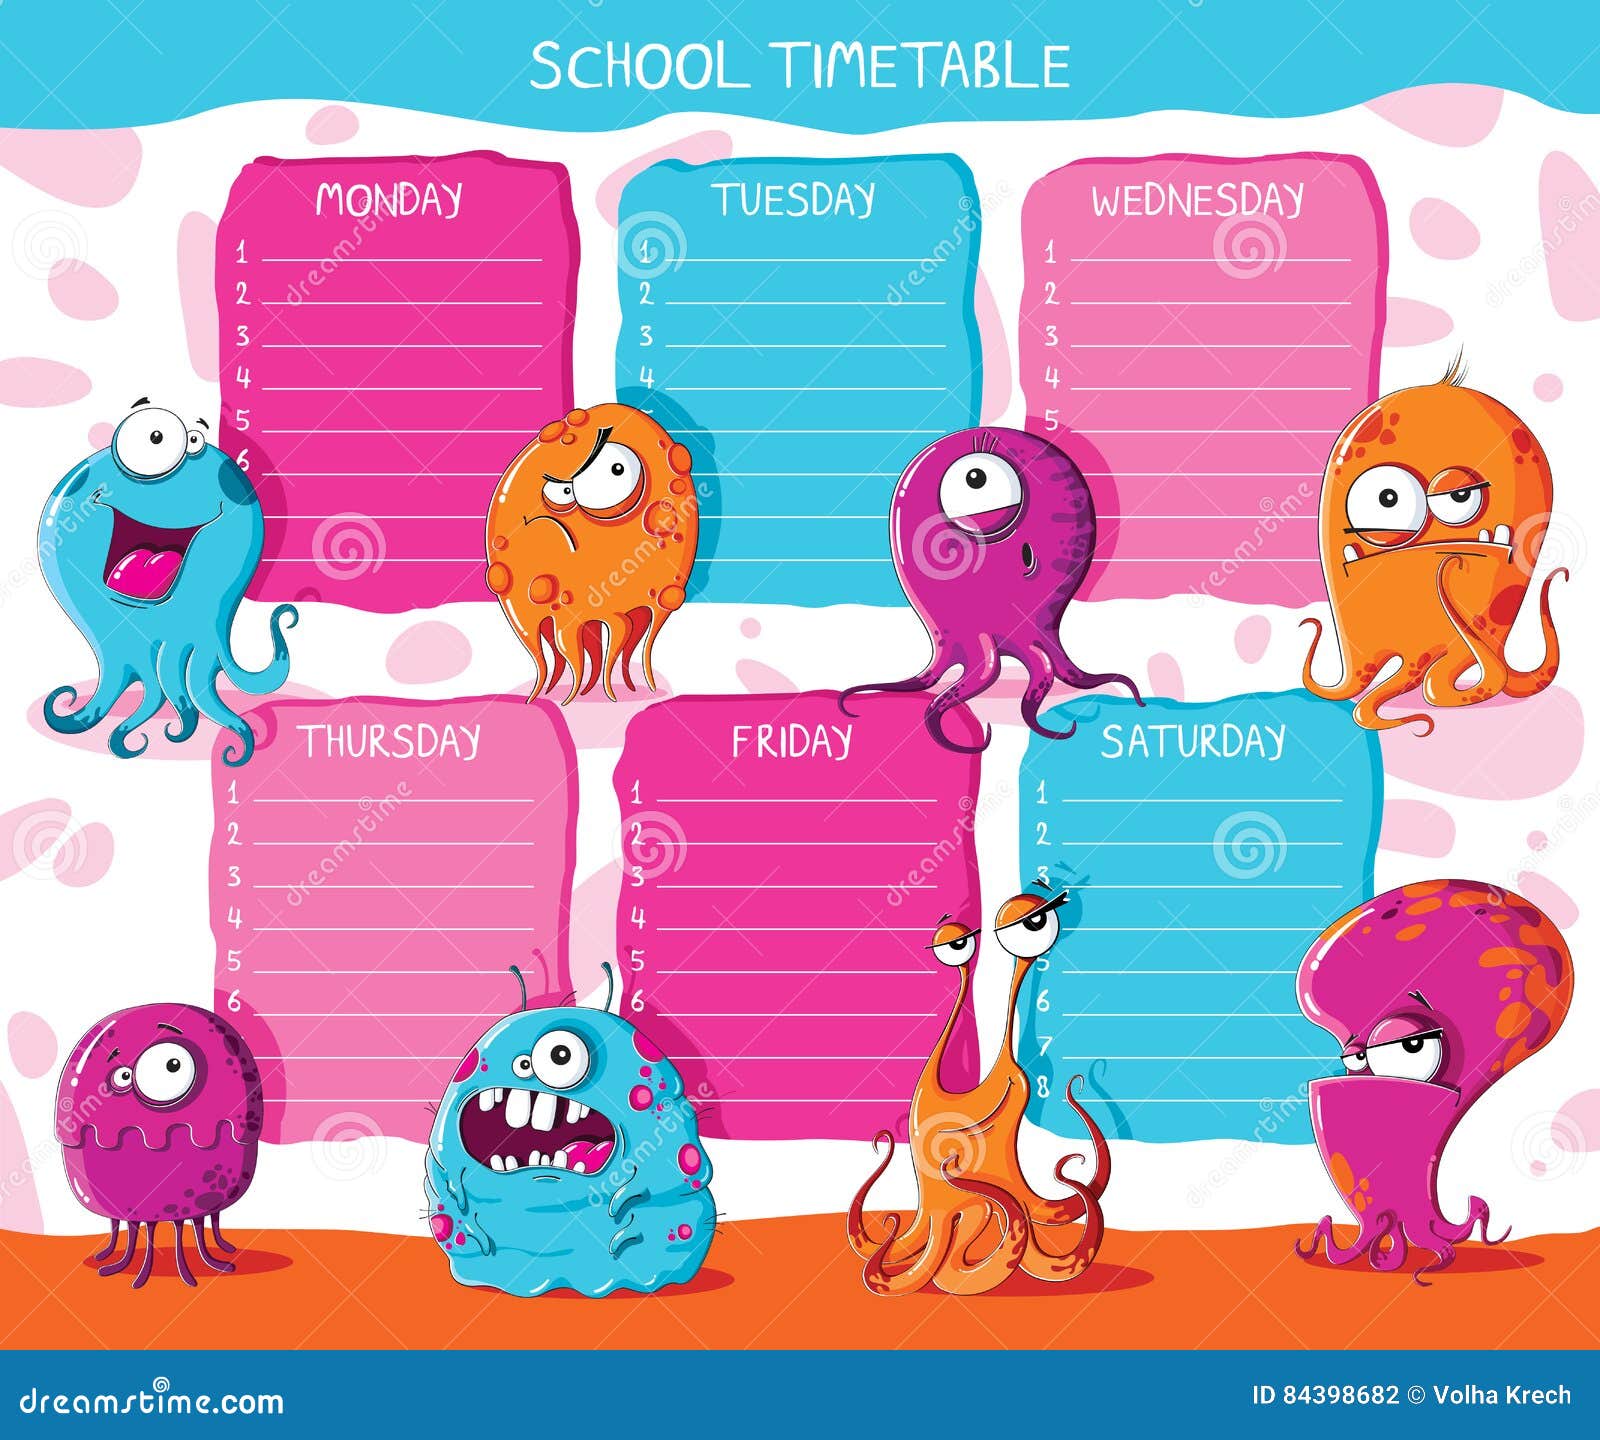 school timetable monsters.  